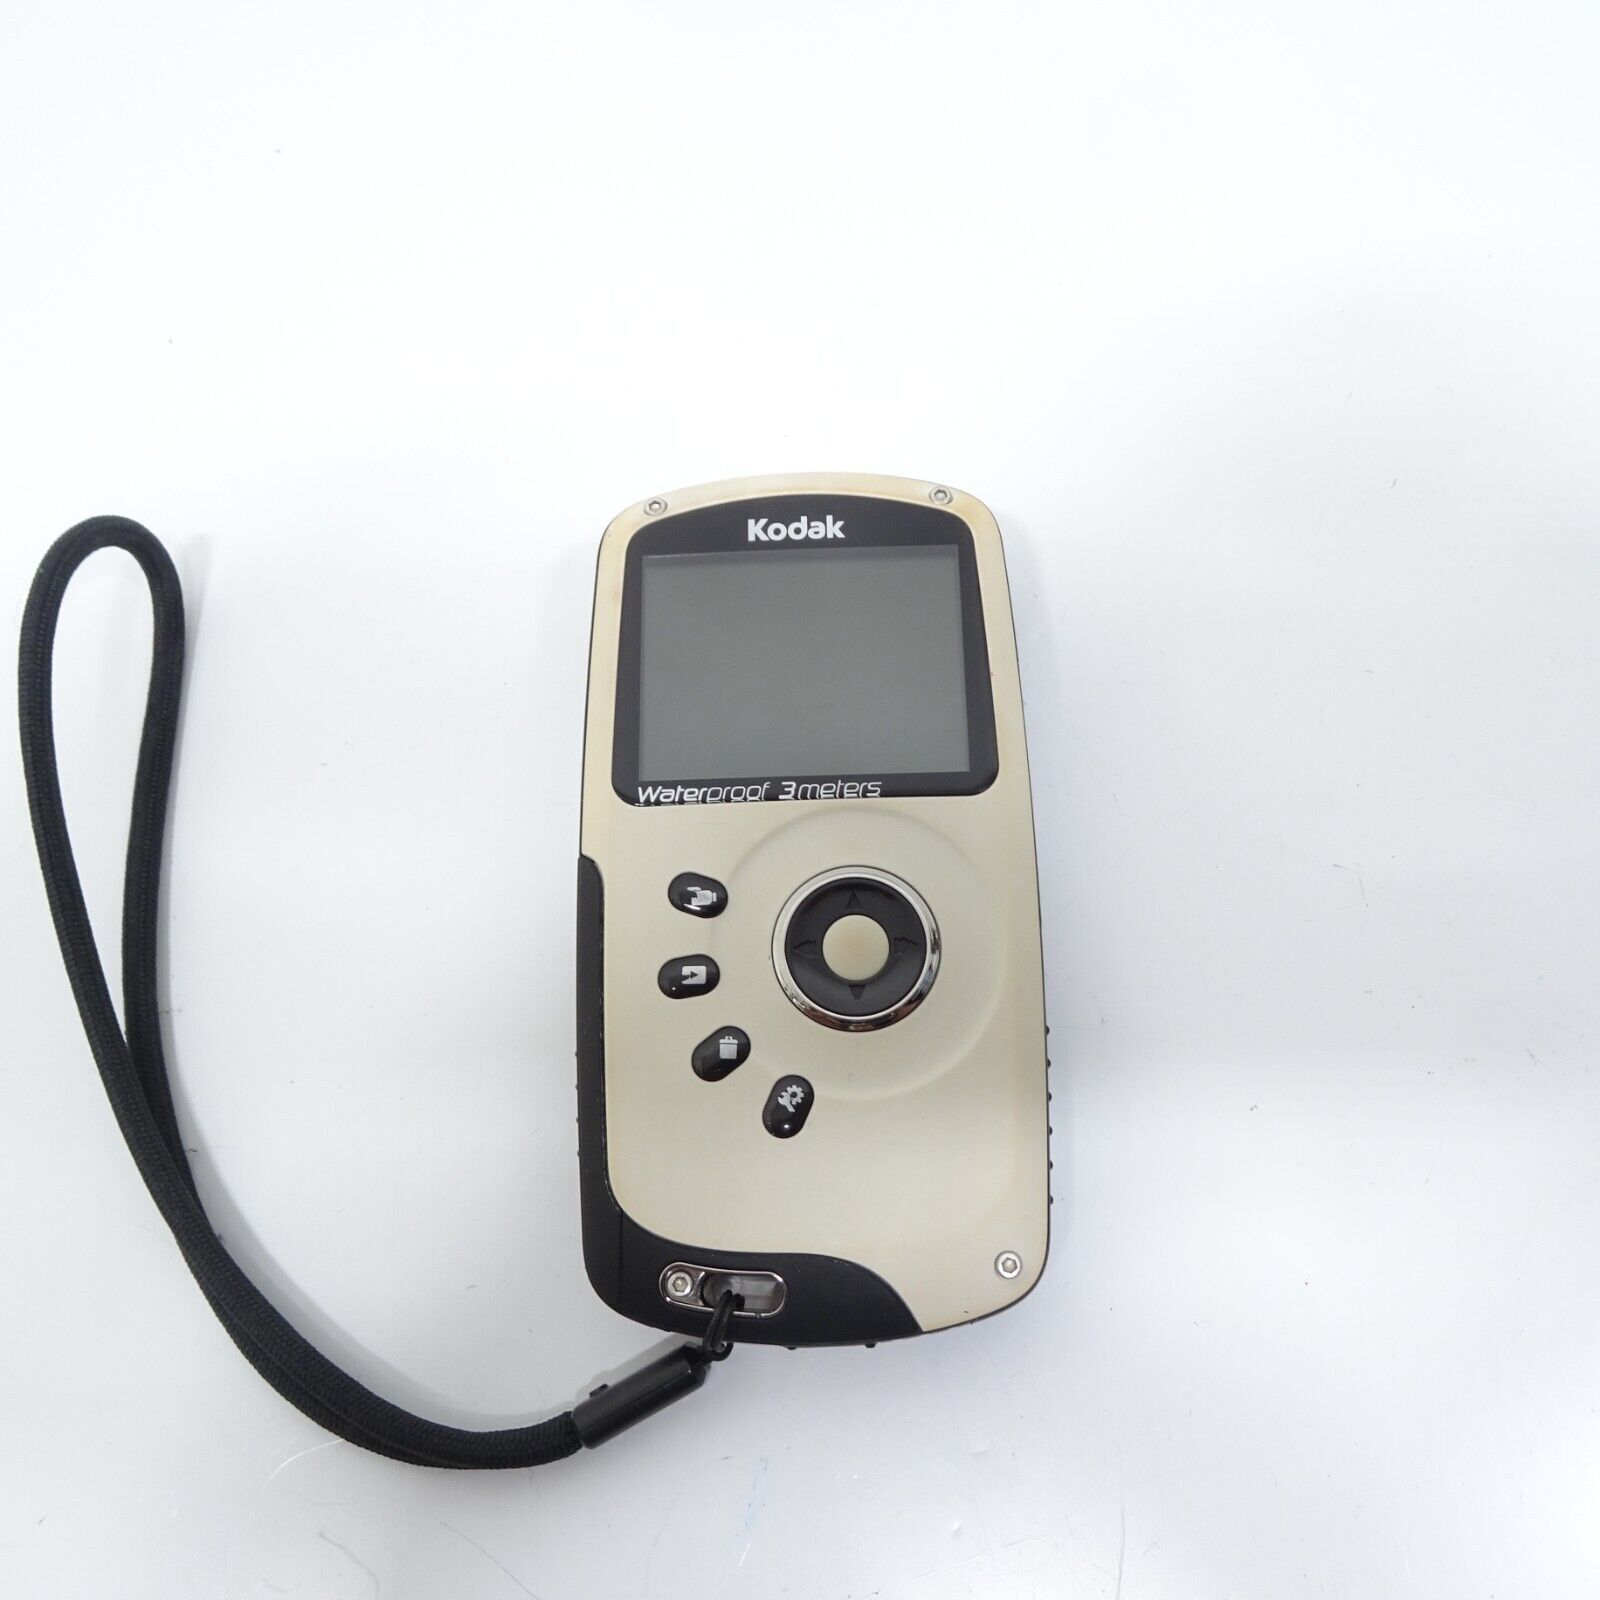 Kodak Play Sport ZX3 Waterproof (3 m/ 10 ft) 1080p Video Camera - white/black - $29.69